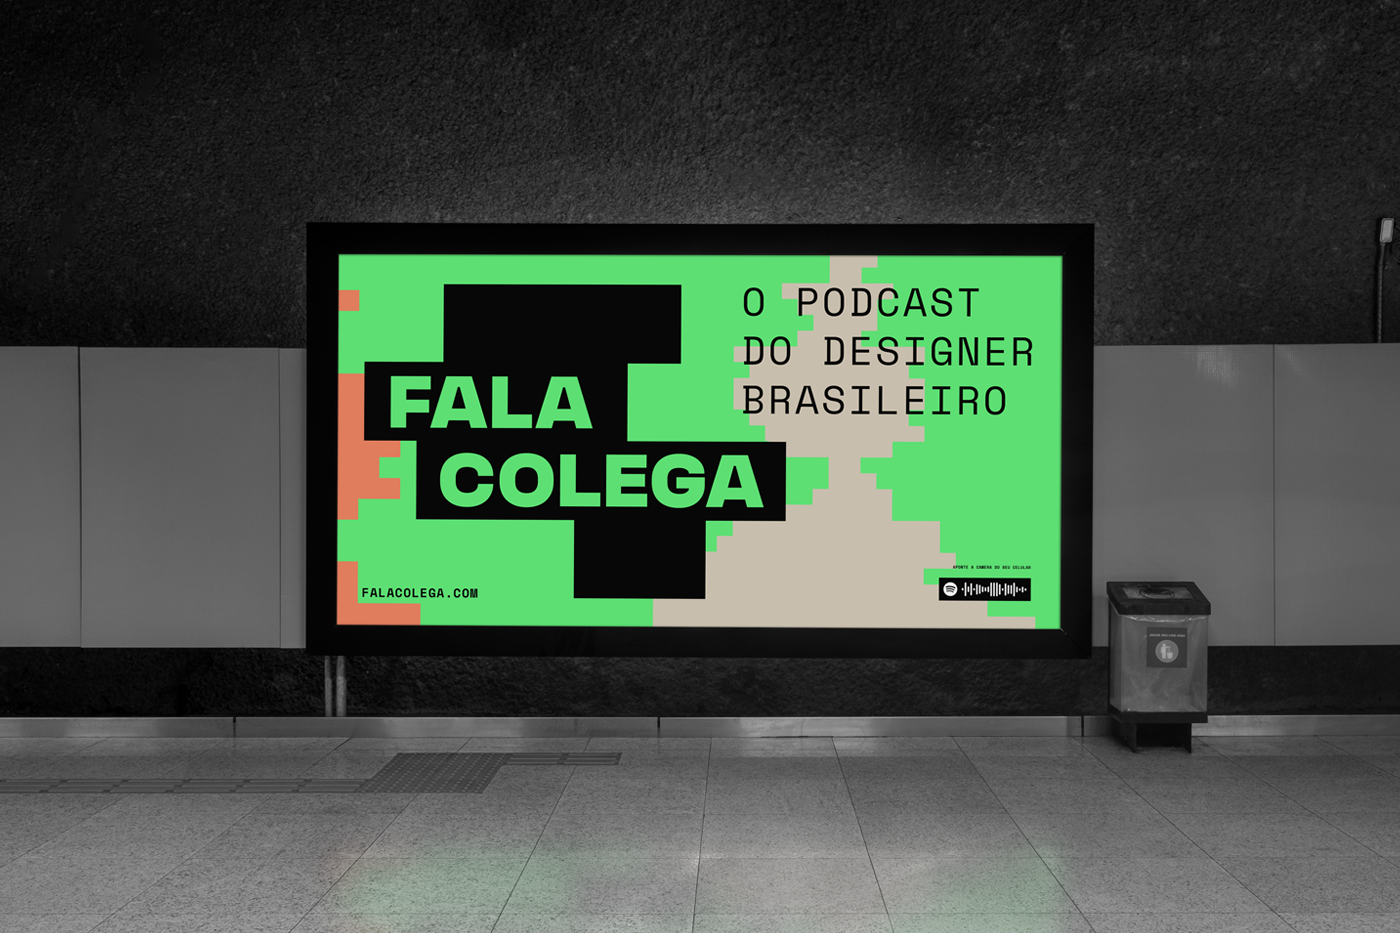 Audio broadcast Fala Colega muisc podcast Radio Station sound waveform